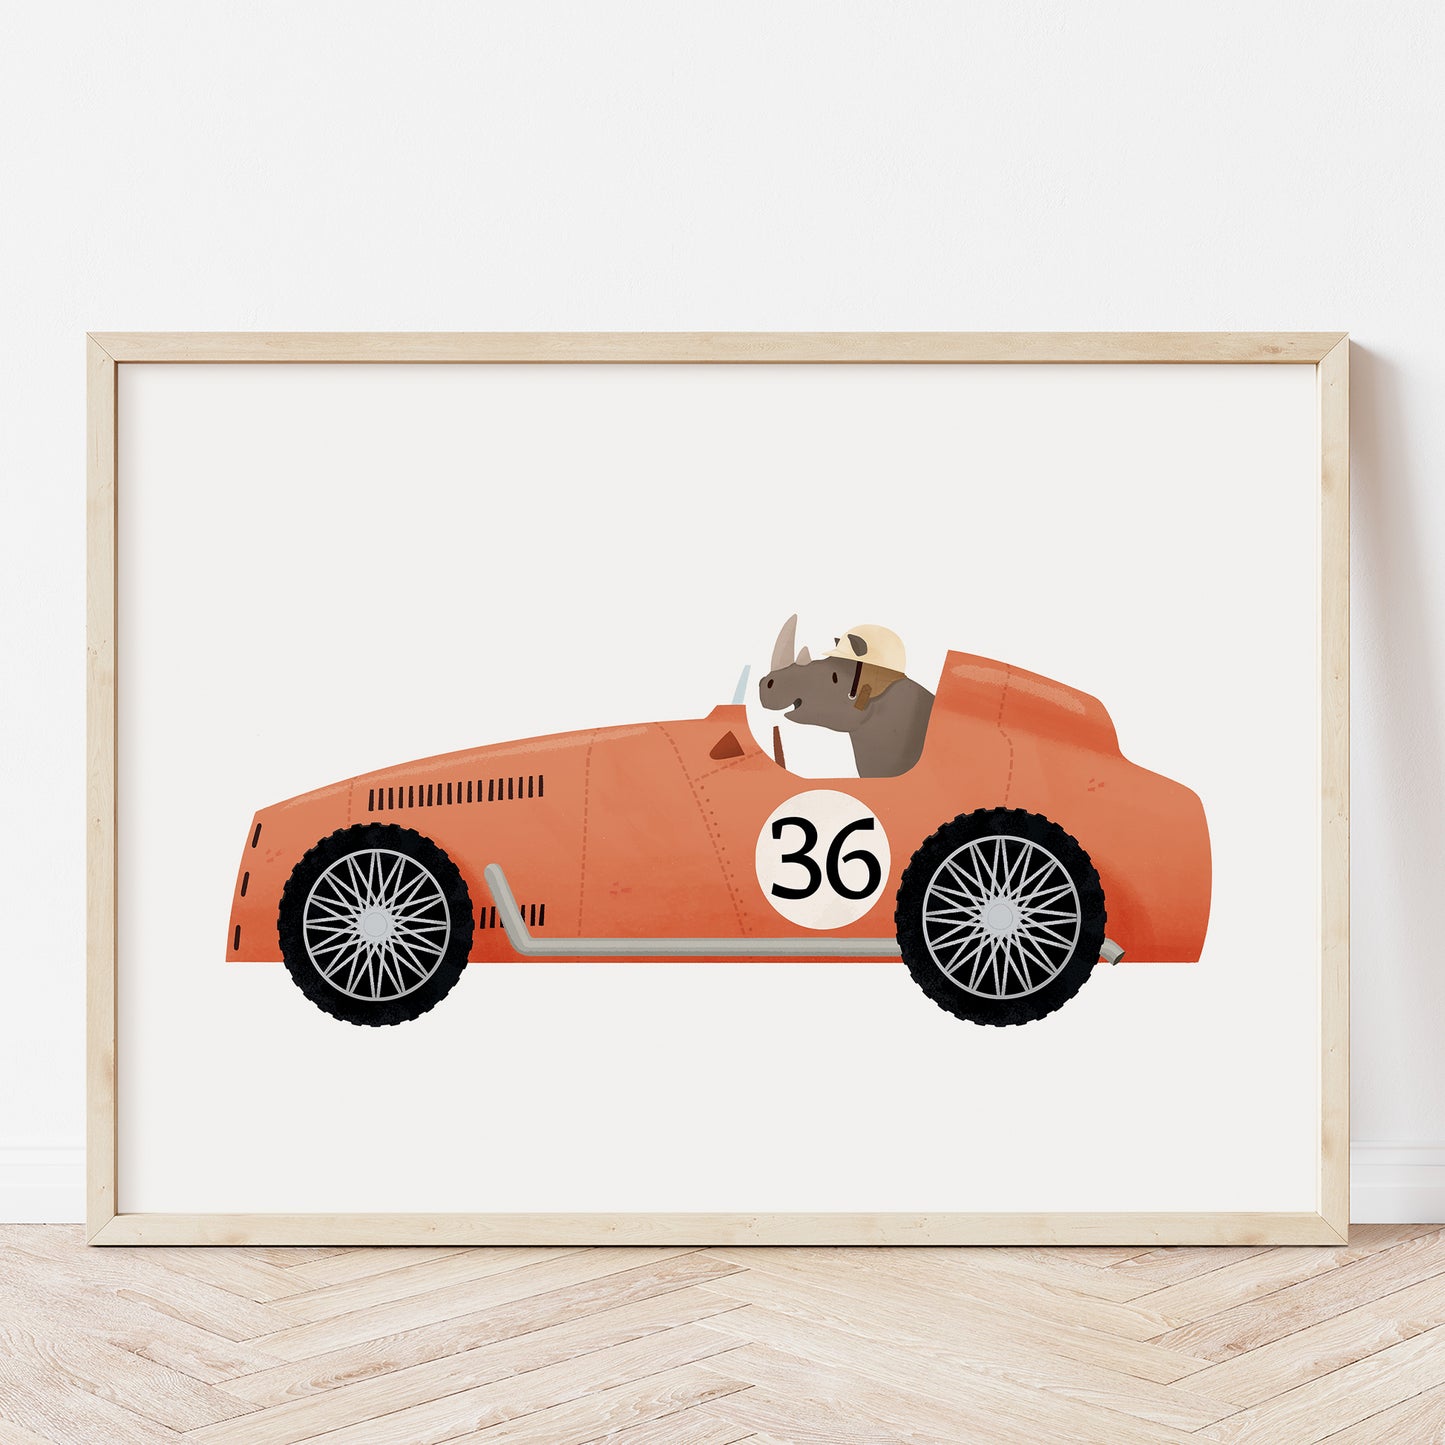 Set of four vintage racing cars prints